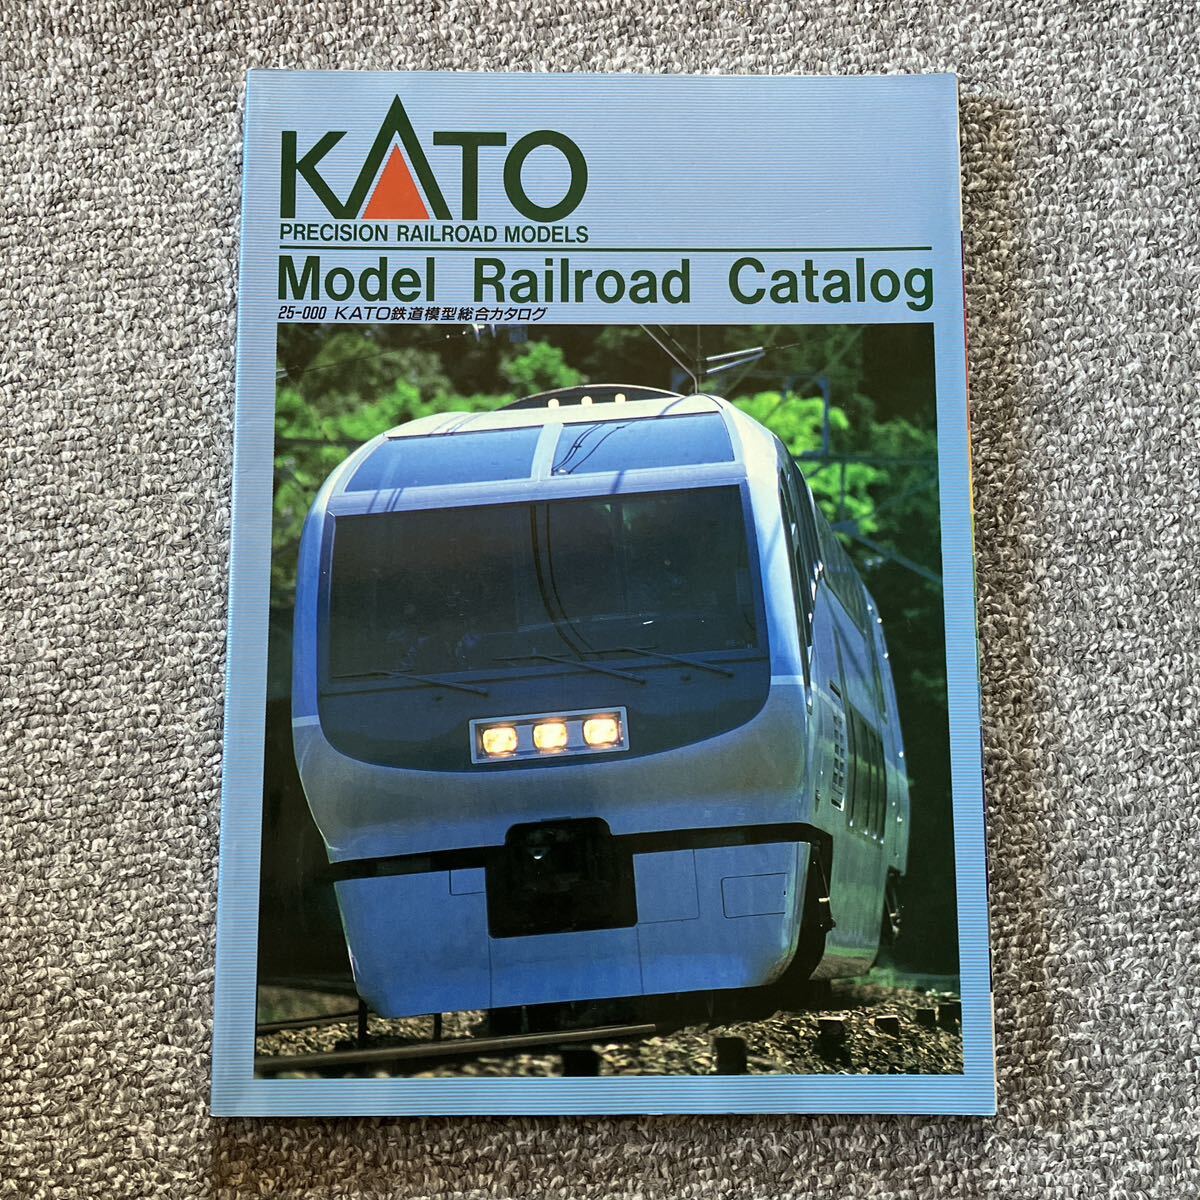 KATO 鉄道模型総合カタログ 1992年 関水金属 カトー 25-000_画像1